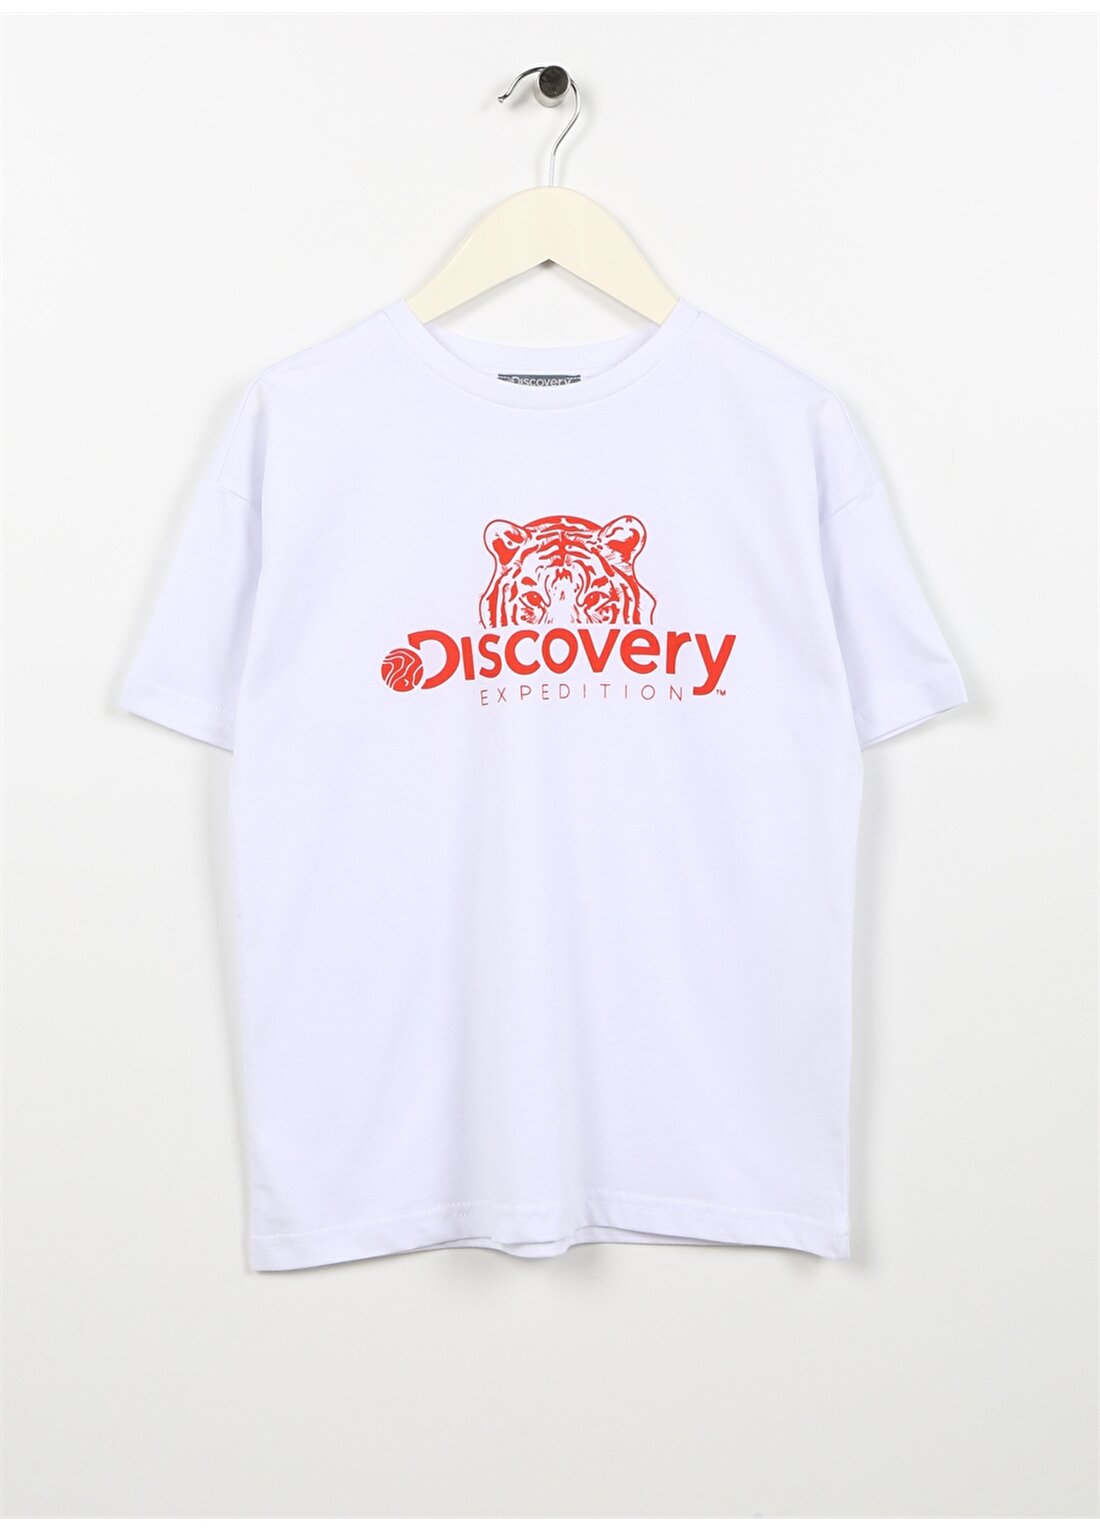 Discovery Expedition Beyaz Kız Çocuk Bisiklet Yaka Baskılı T-Shirt PERU GIRL